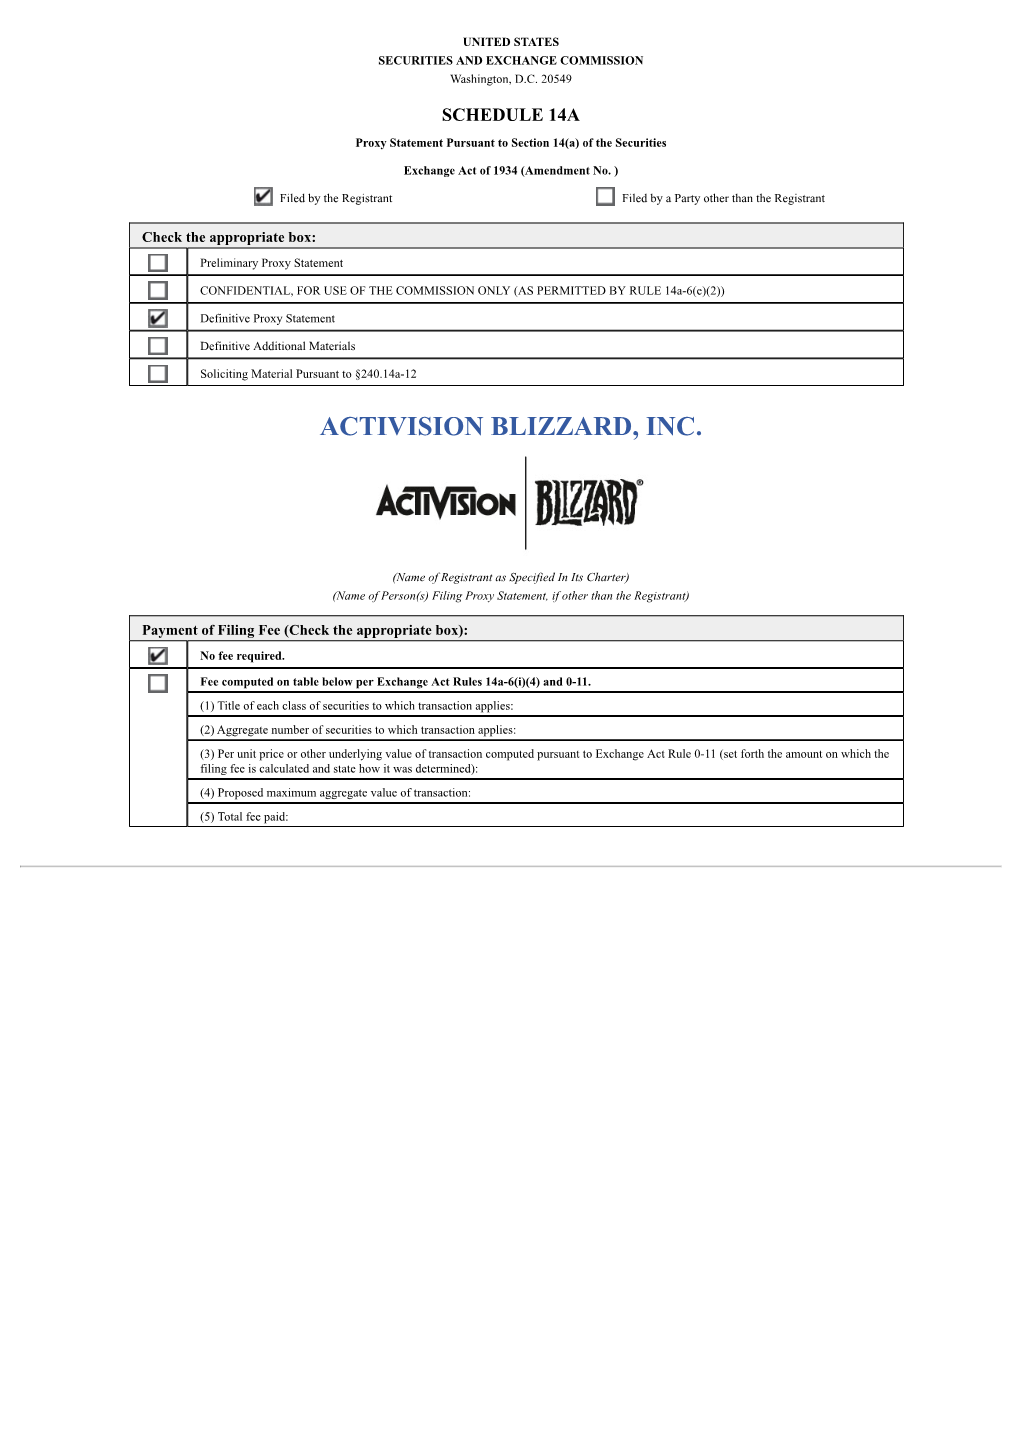 Activision Blizzard, Inc